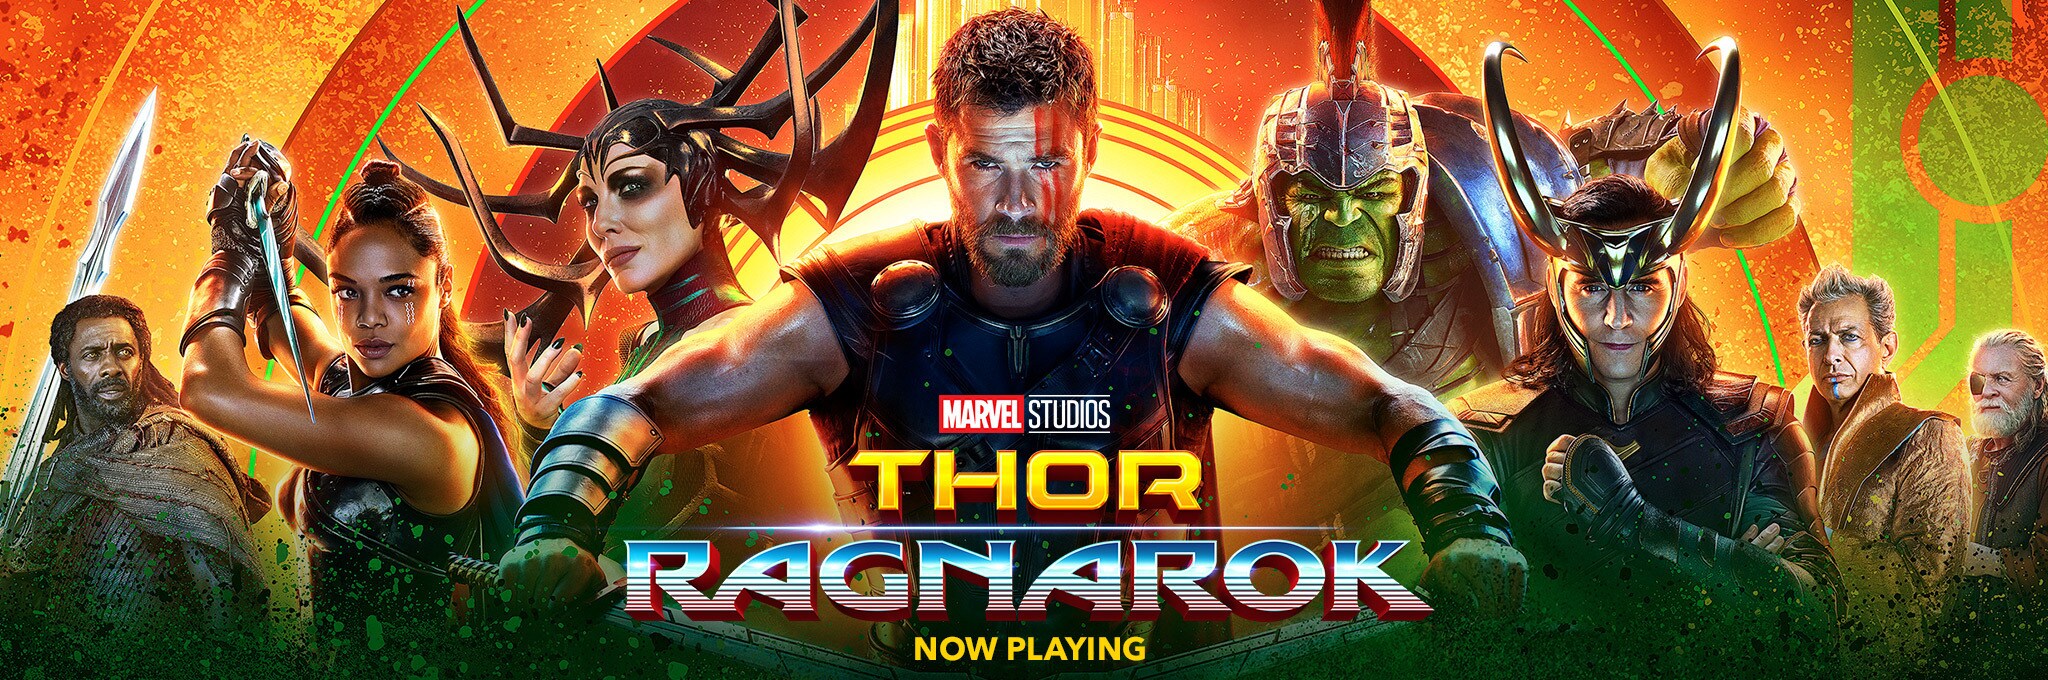 Thor: ragnarok, netflix in may